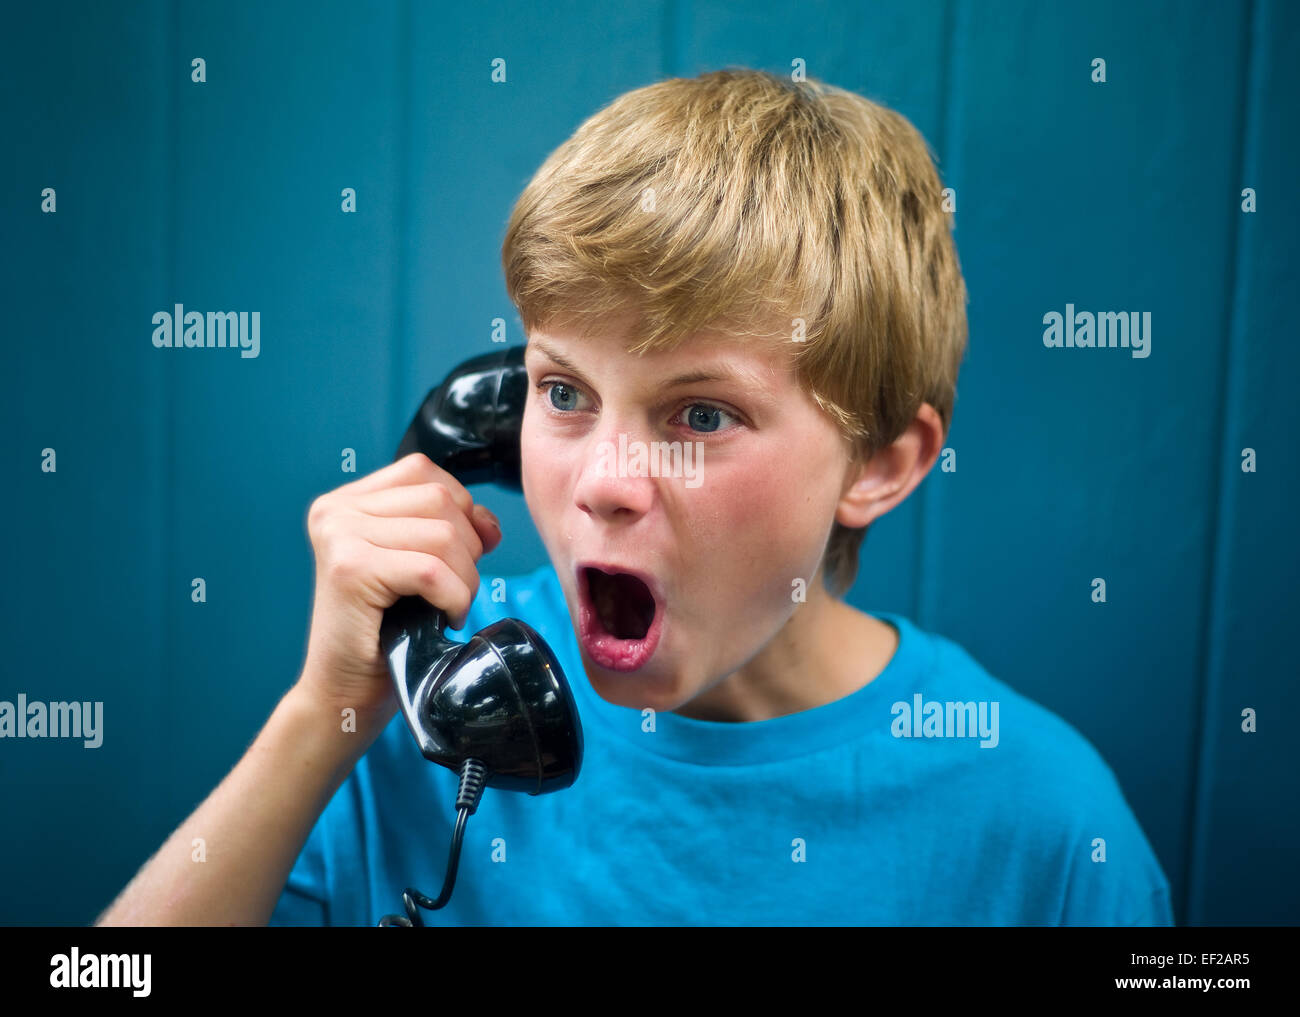 Unhappy child on phone. Job stress, bad news. Stock Photo